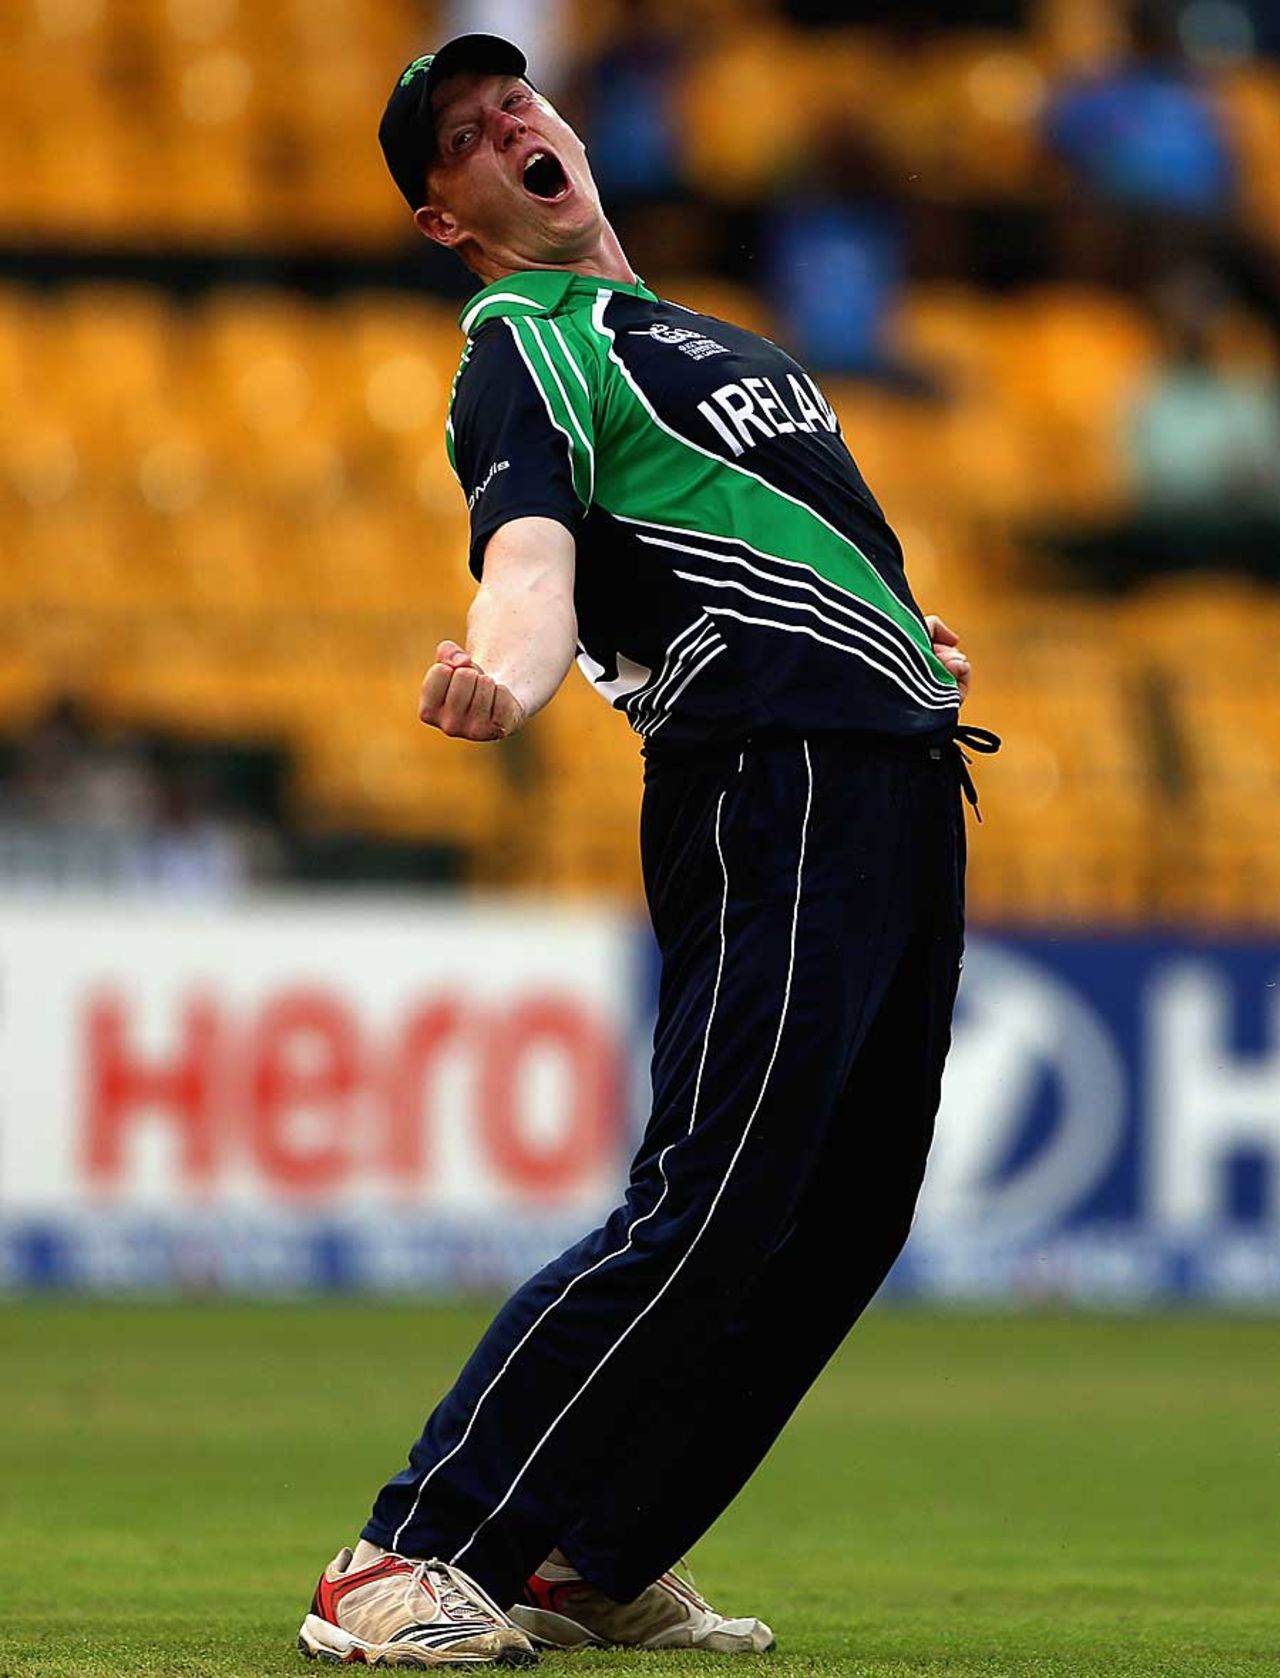 Kevin O'Brien lets out a scream, Australia v Ireland, World Twenty20 2012, Group B, Colombo, September 19, 2012